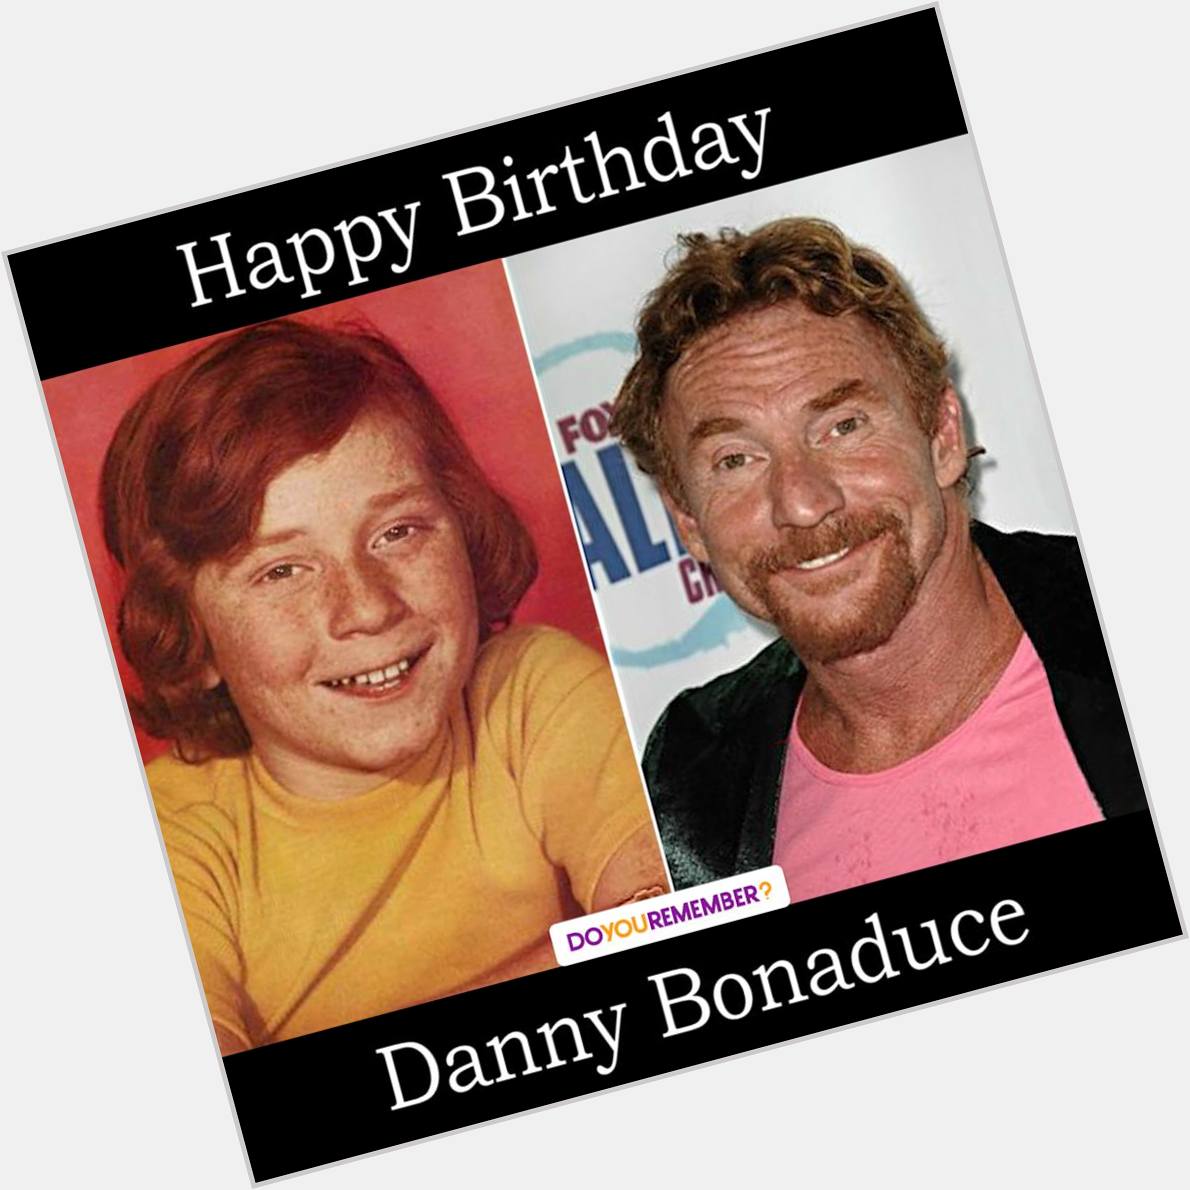 Happy Birthday, Danny Bonaduce!   